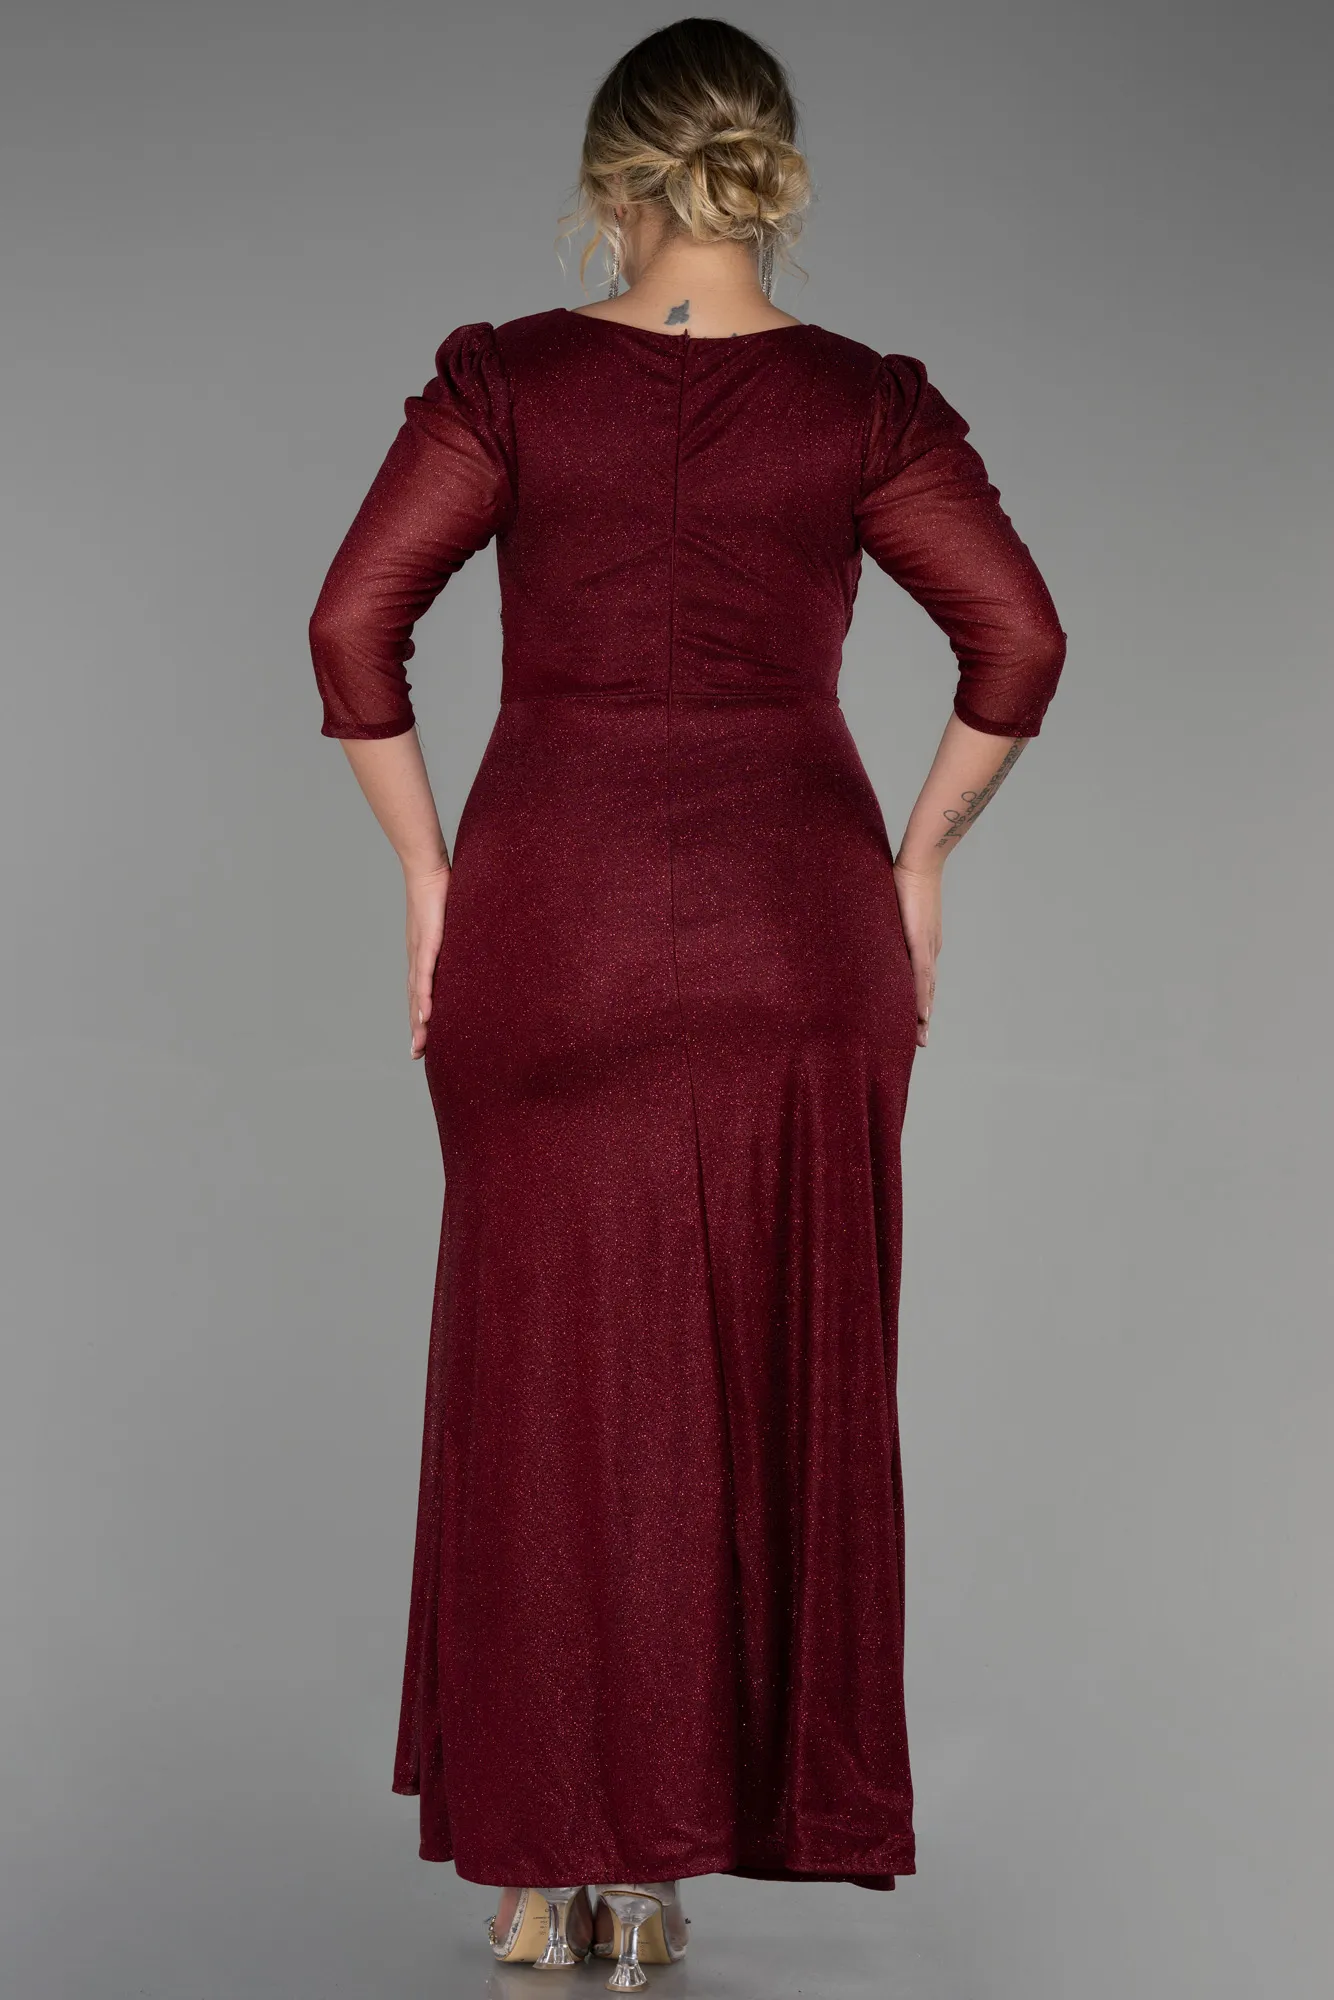 Burgundy-Long Plus Size Evening Dress ABU3279